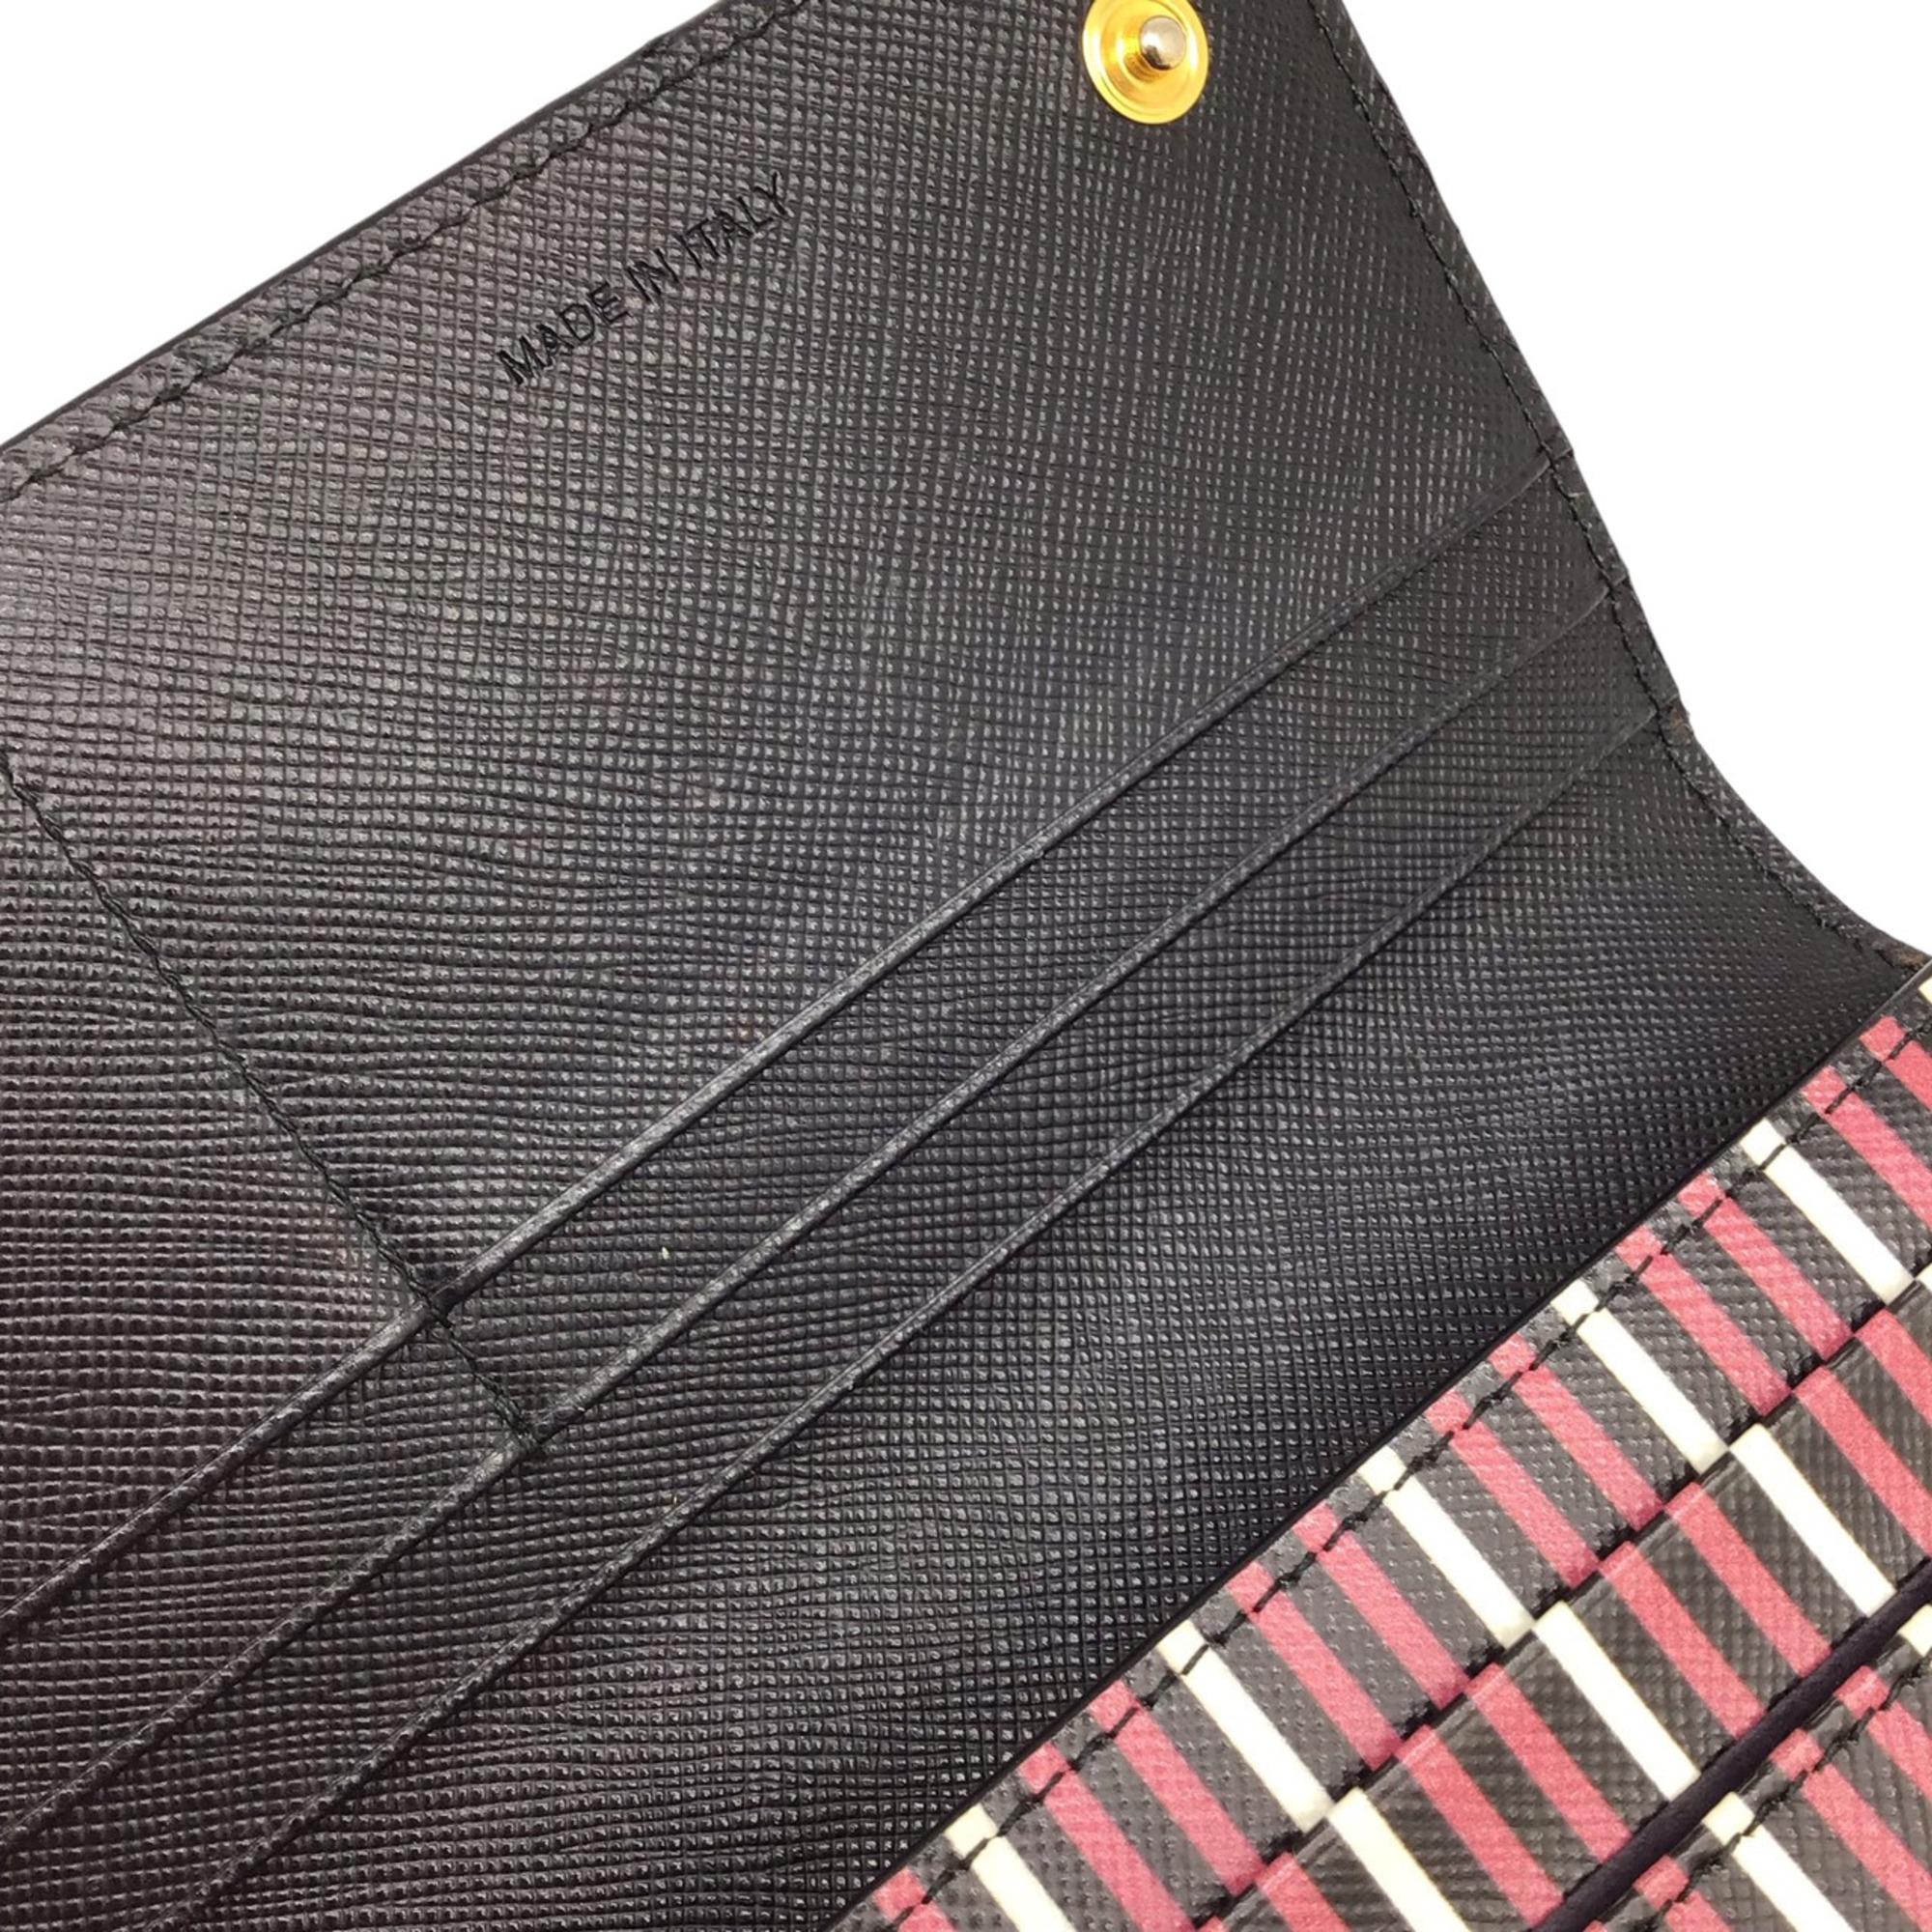 PRADA Prada Long Flap Wallet Saffiano Bifold Striped Multicolor Card Key G Hardware Accessory Women's